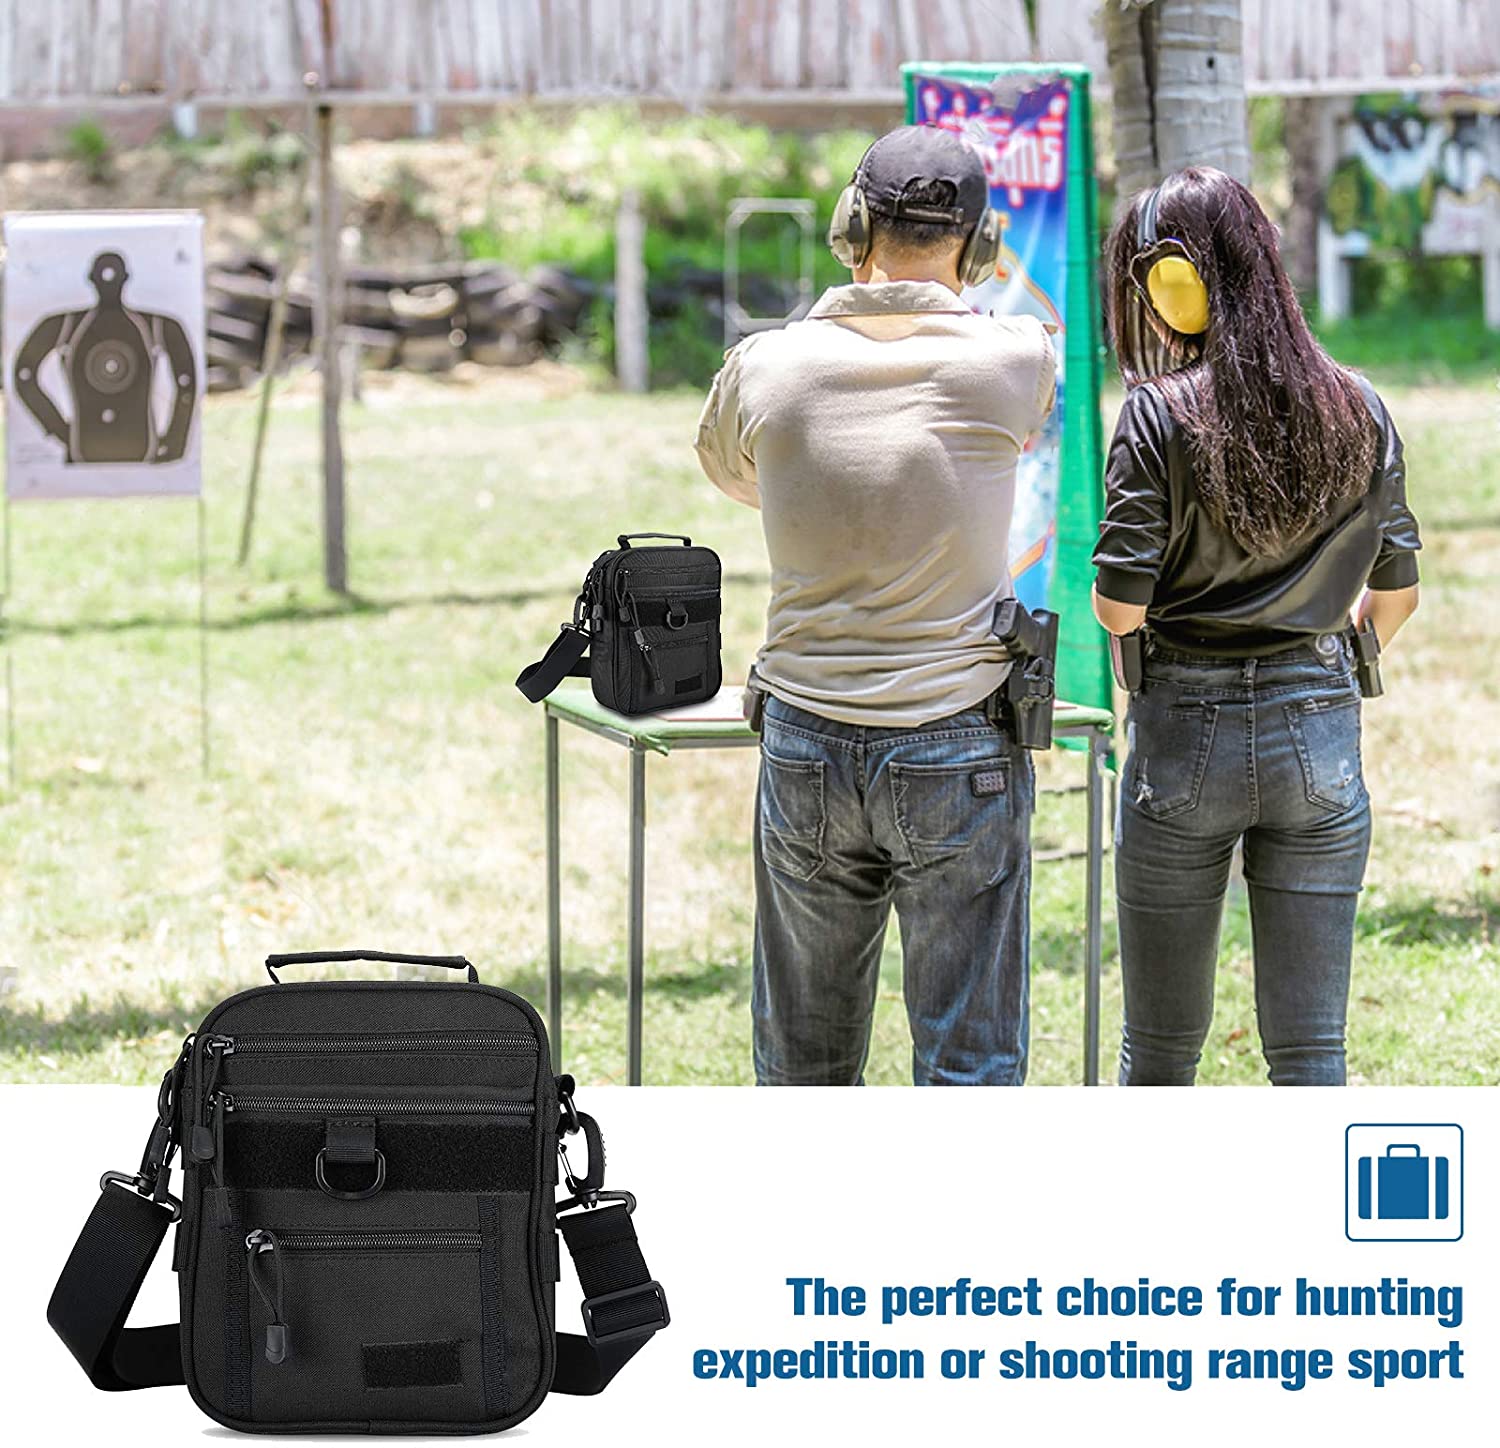 HR-5 Hunting range bag1